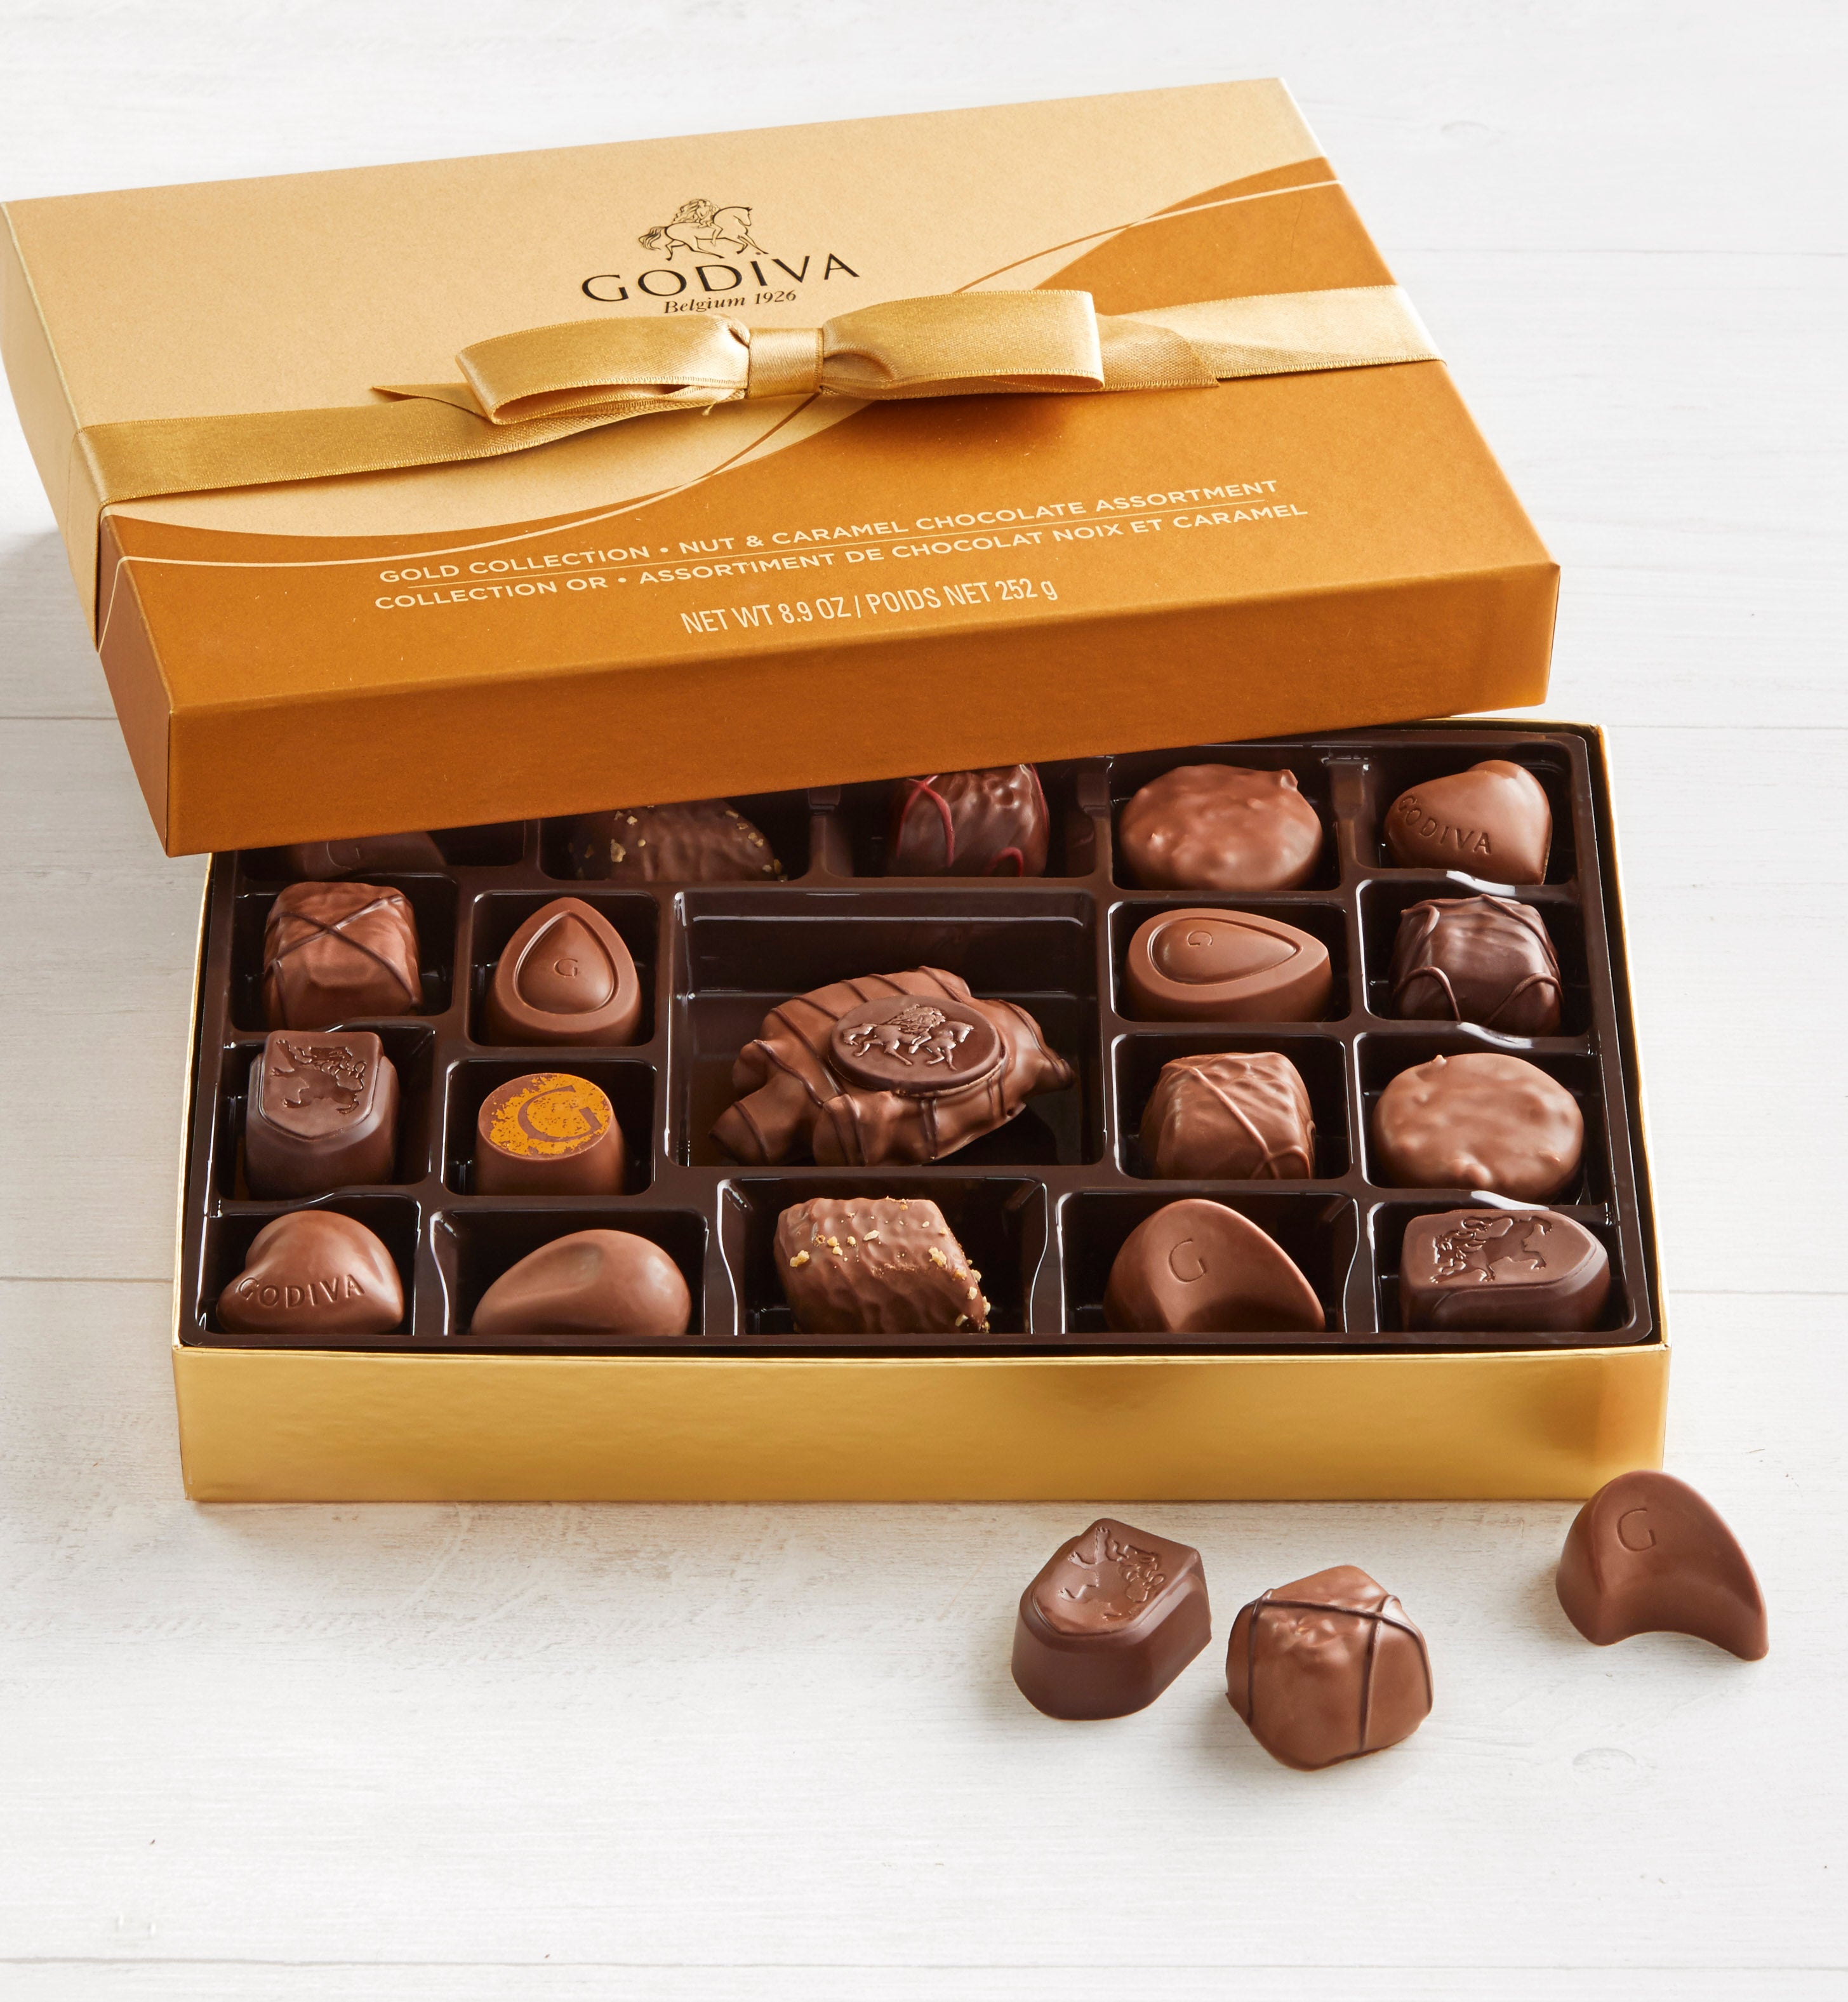 Godiva Nuts & Caramel Gift Box 19pc